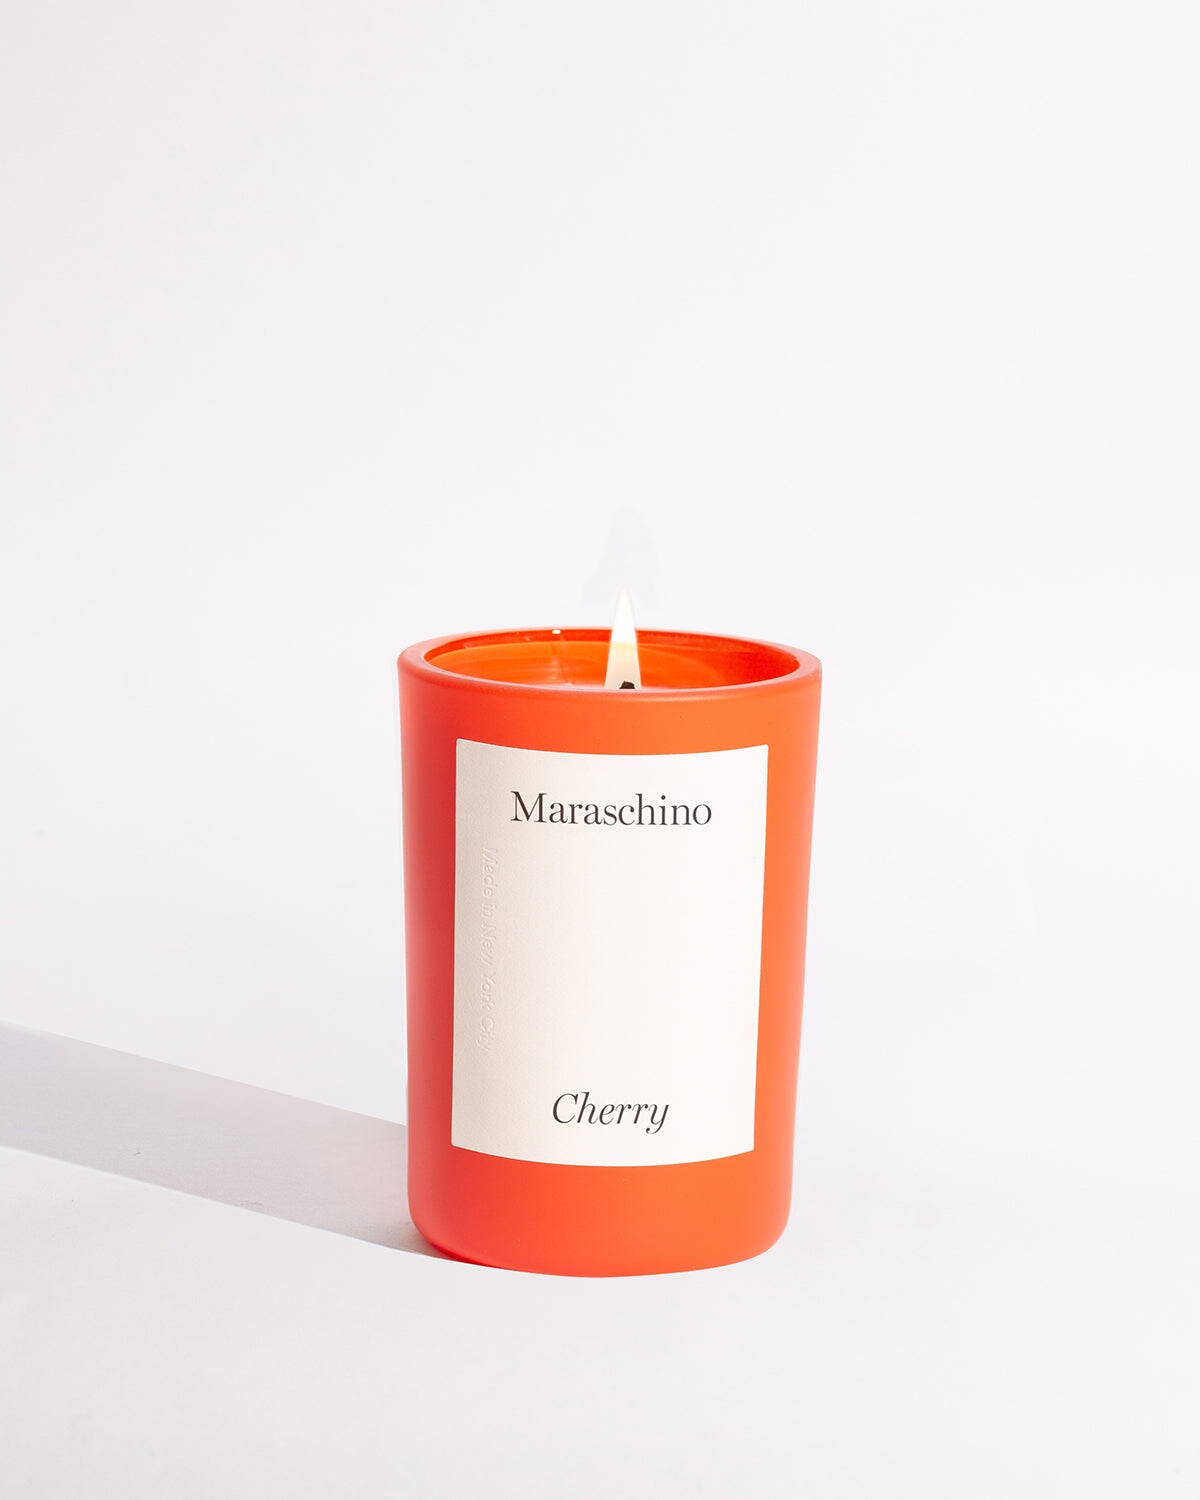 February: Limited Edition Maraschino Cherry Candle Limited Edition Brooklyn Candle Studio 